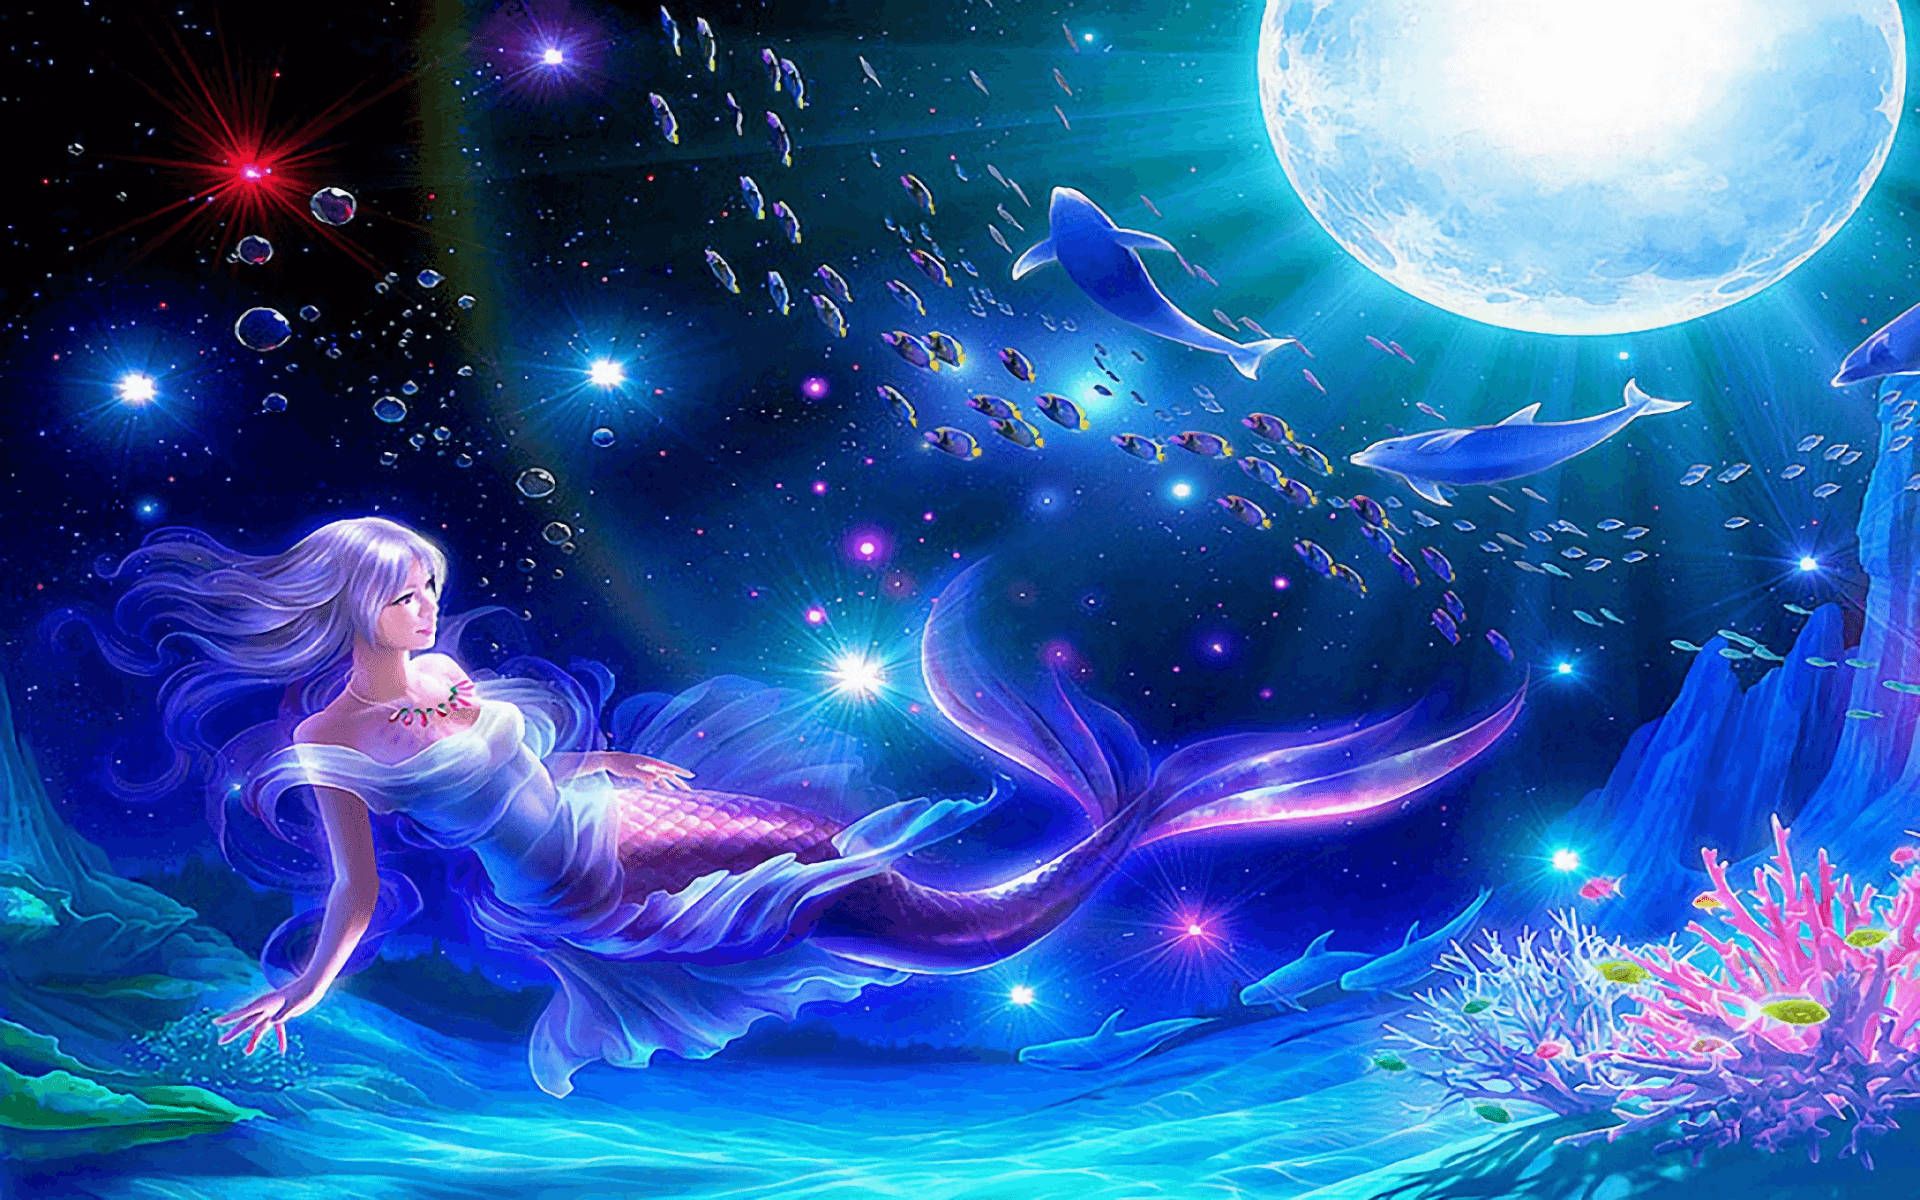 Free Mermaid Wallpaper Downloads, Mermaid Wallpaper for FREE